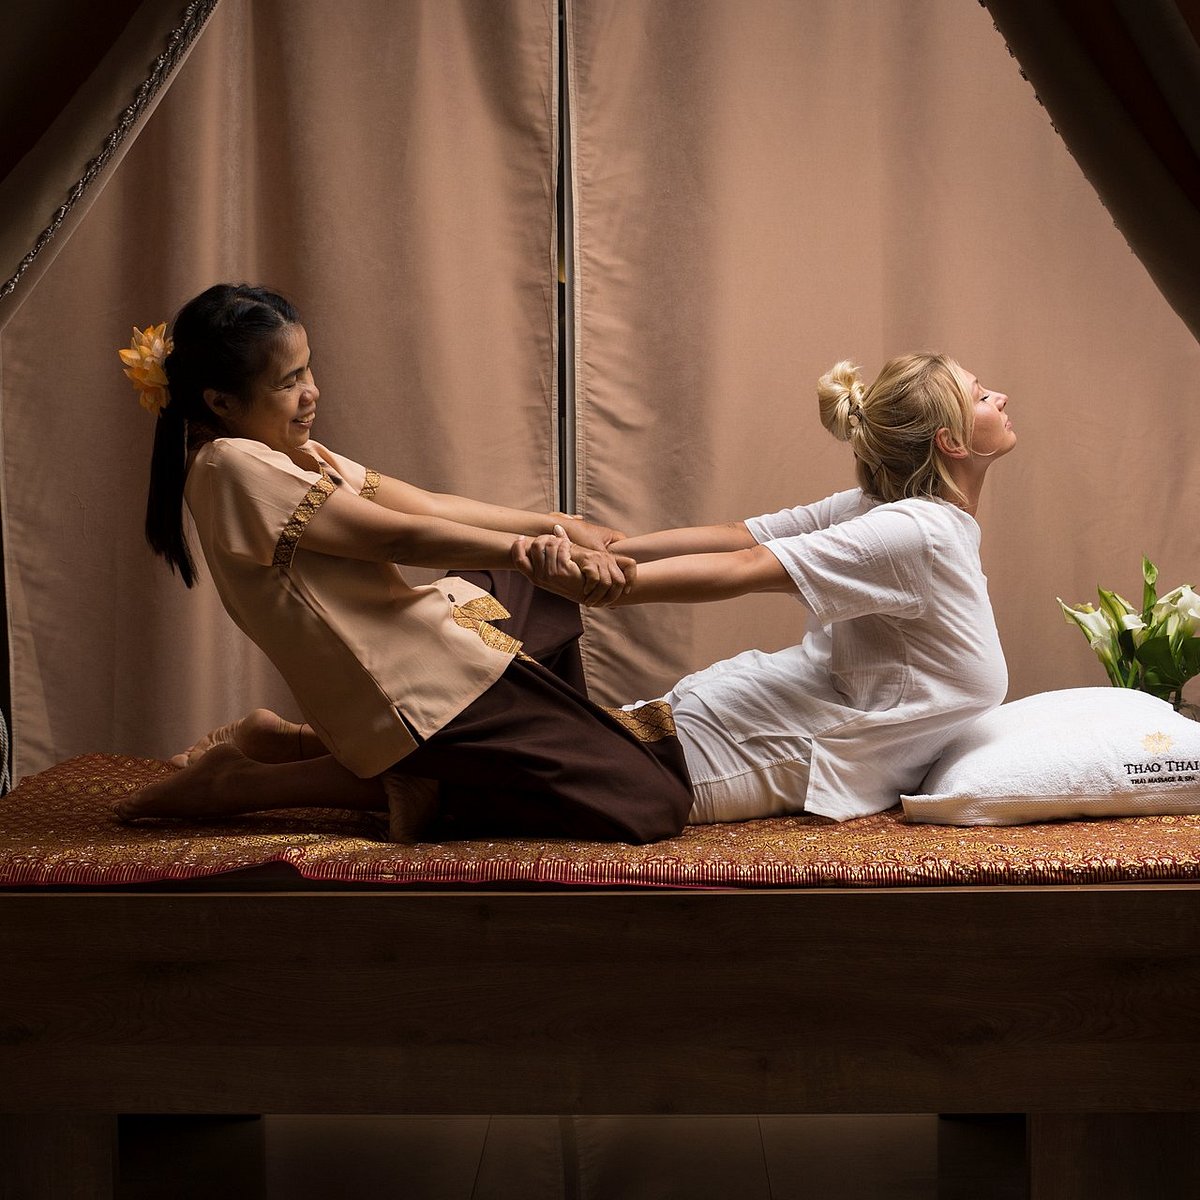 Traditional massage. Thai Thai Spa. Тайский массаж. Традиционный тайский массаж. Традиционный тайский массаж мужчине.